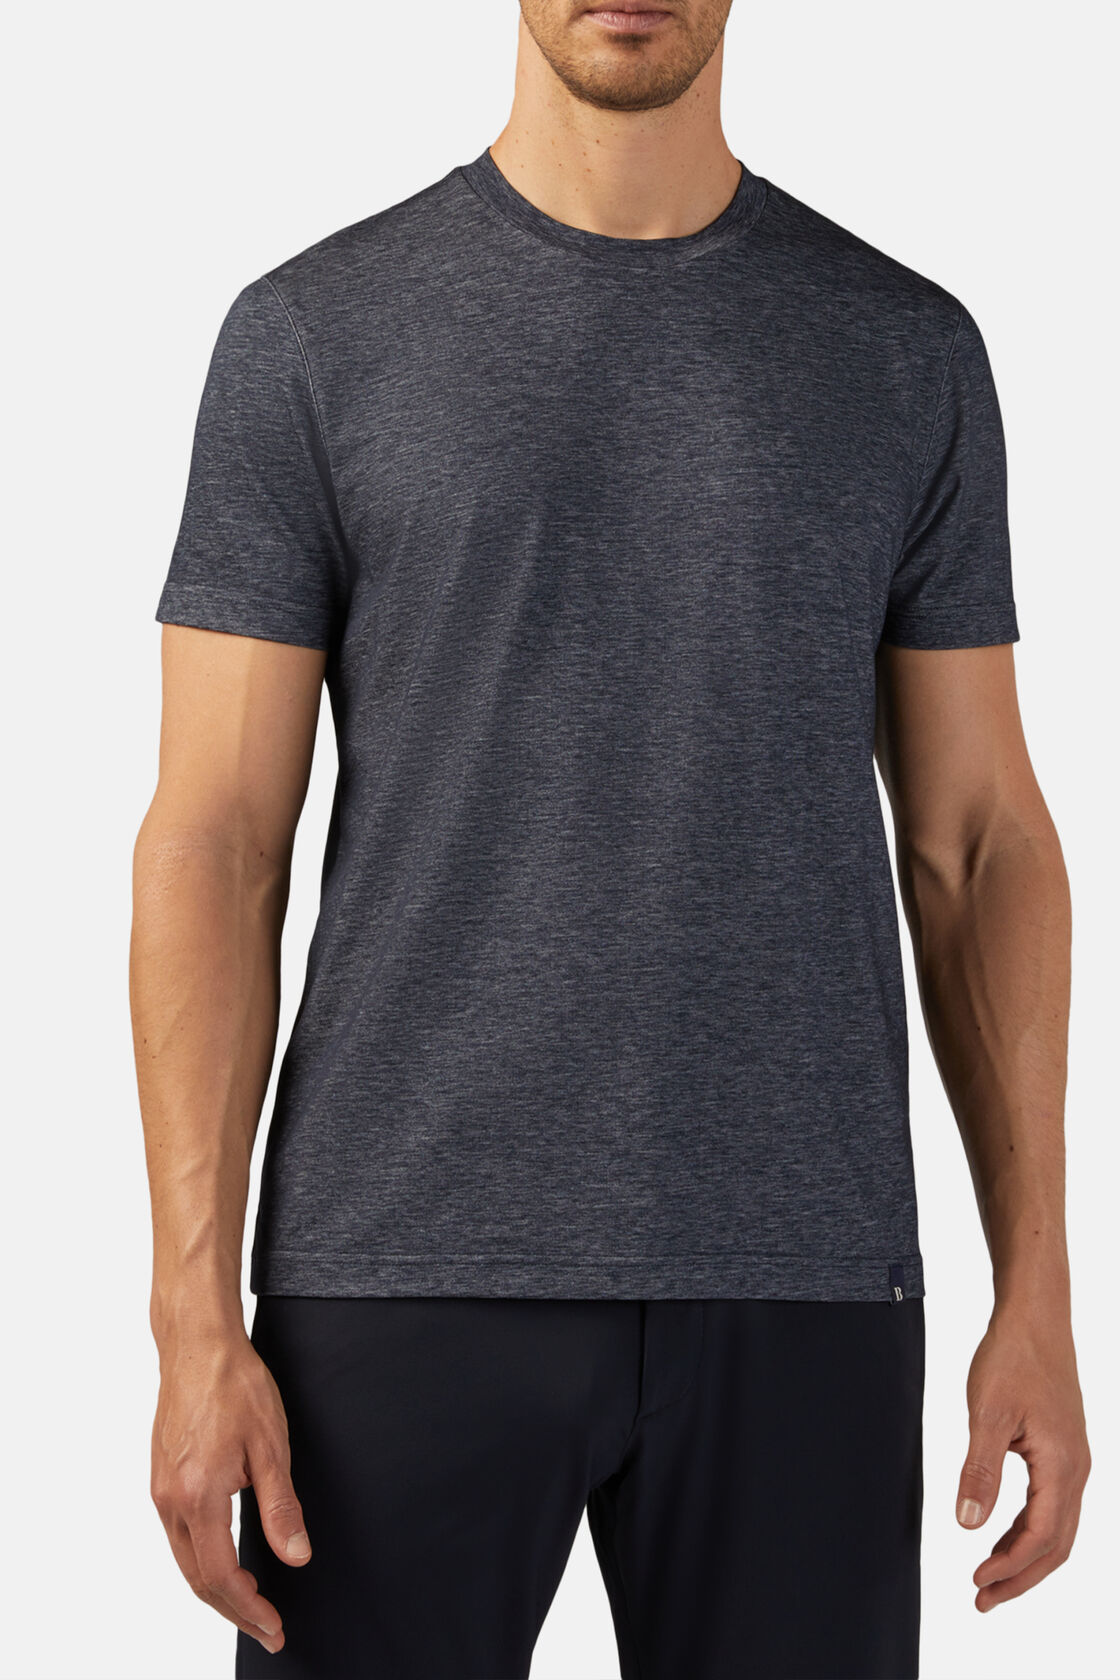 T-Shirt aus Baumwolle Nylon Tencel, Navy blau, hi-res